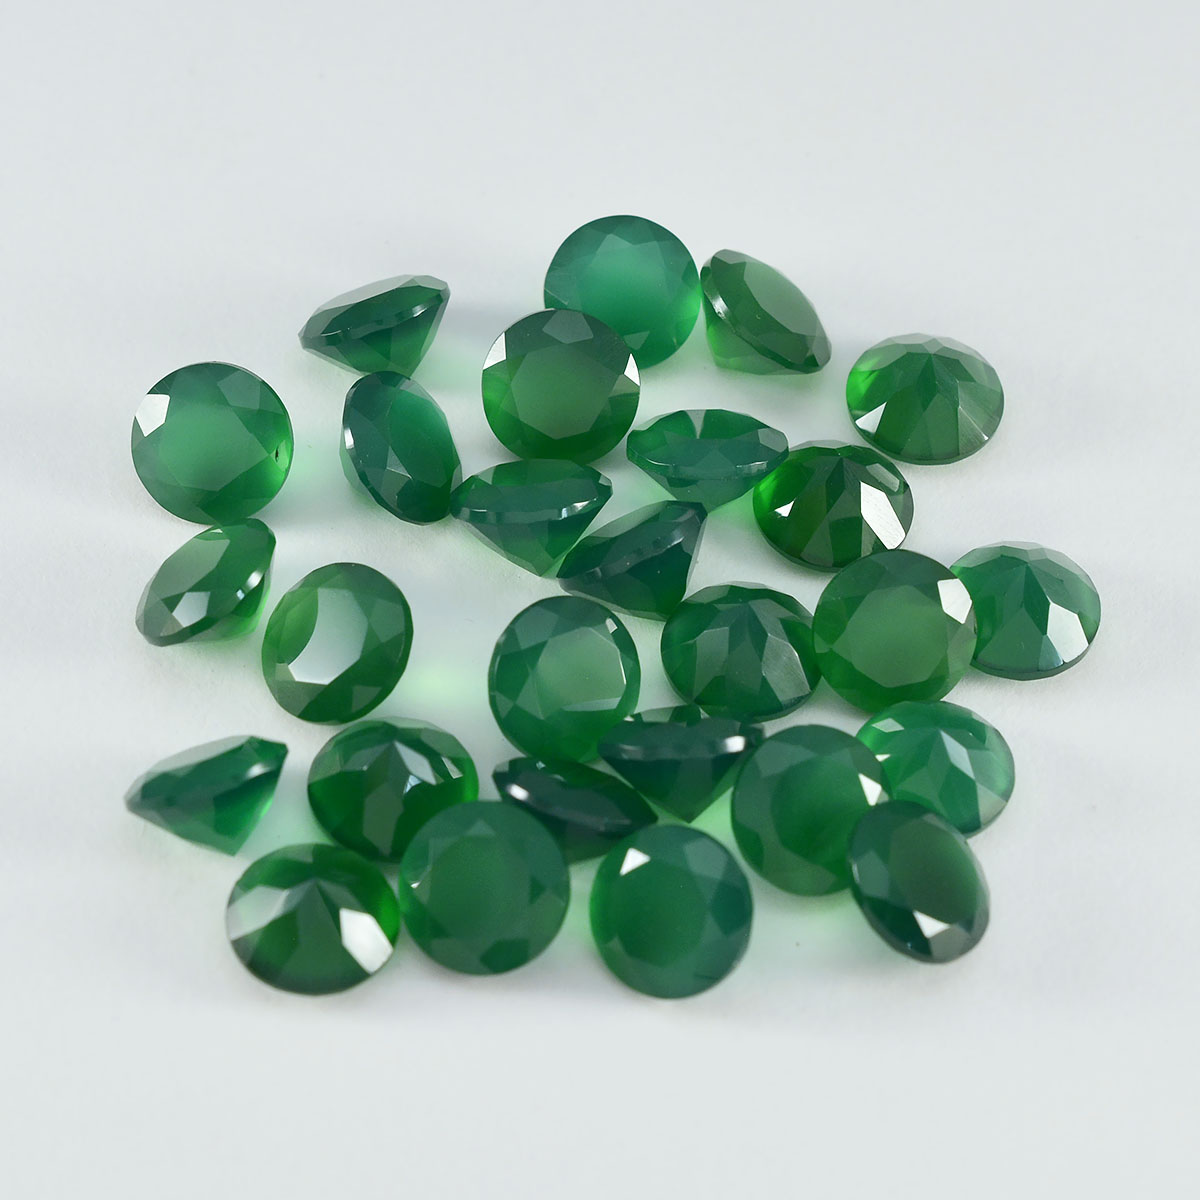 Riyogems 1 Stück echter grüner Onyx, facettiert, 4 x 4 mm, runde Form, A+1-Qualität, loser Edelstein